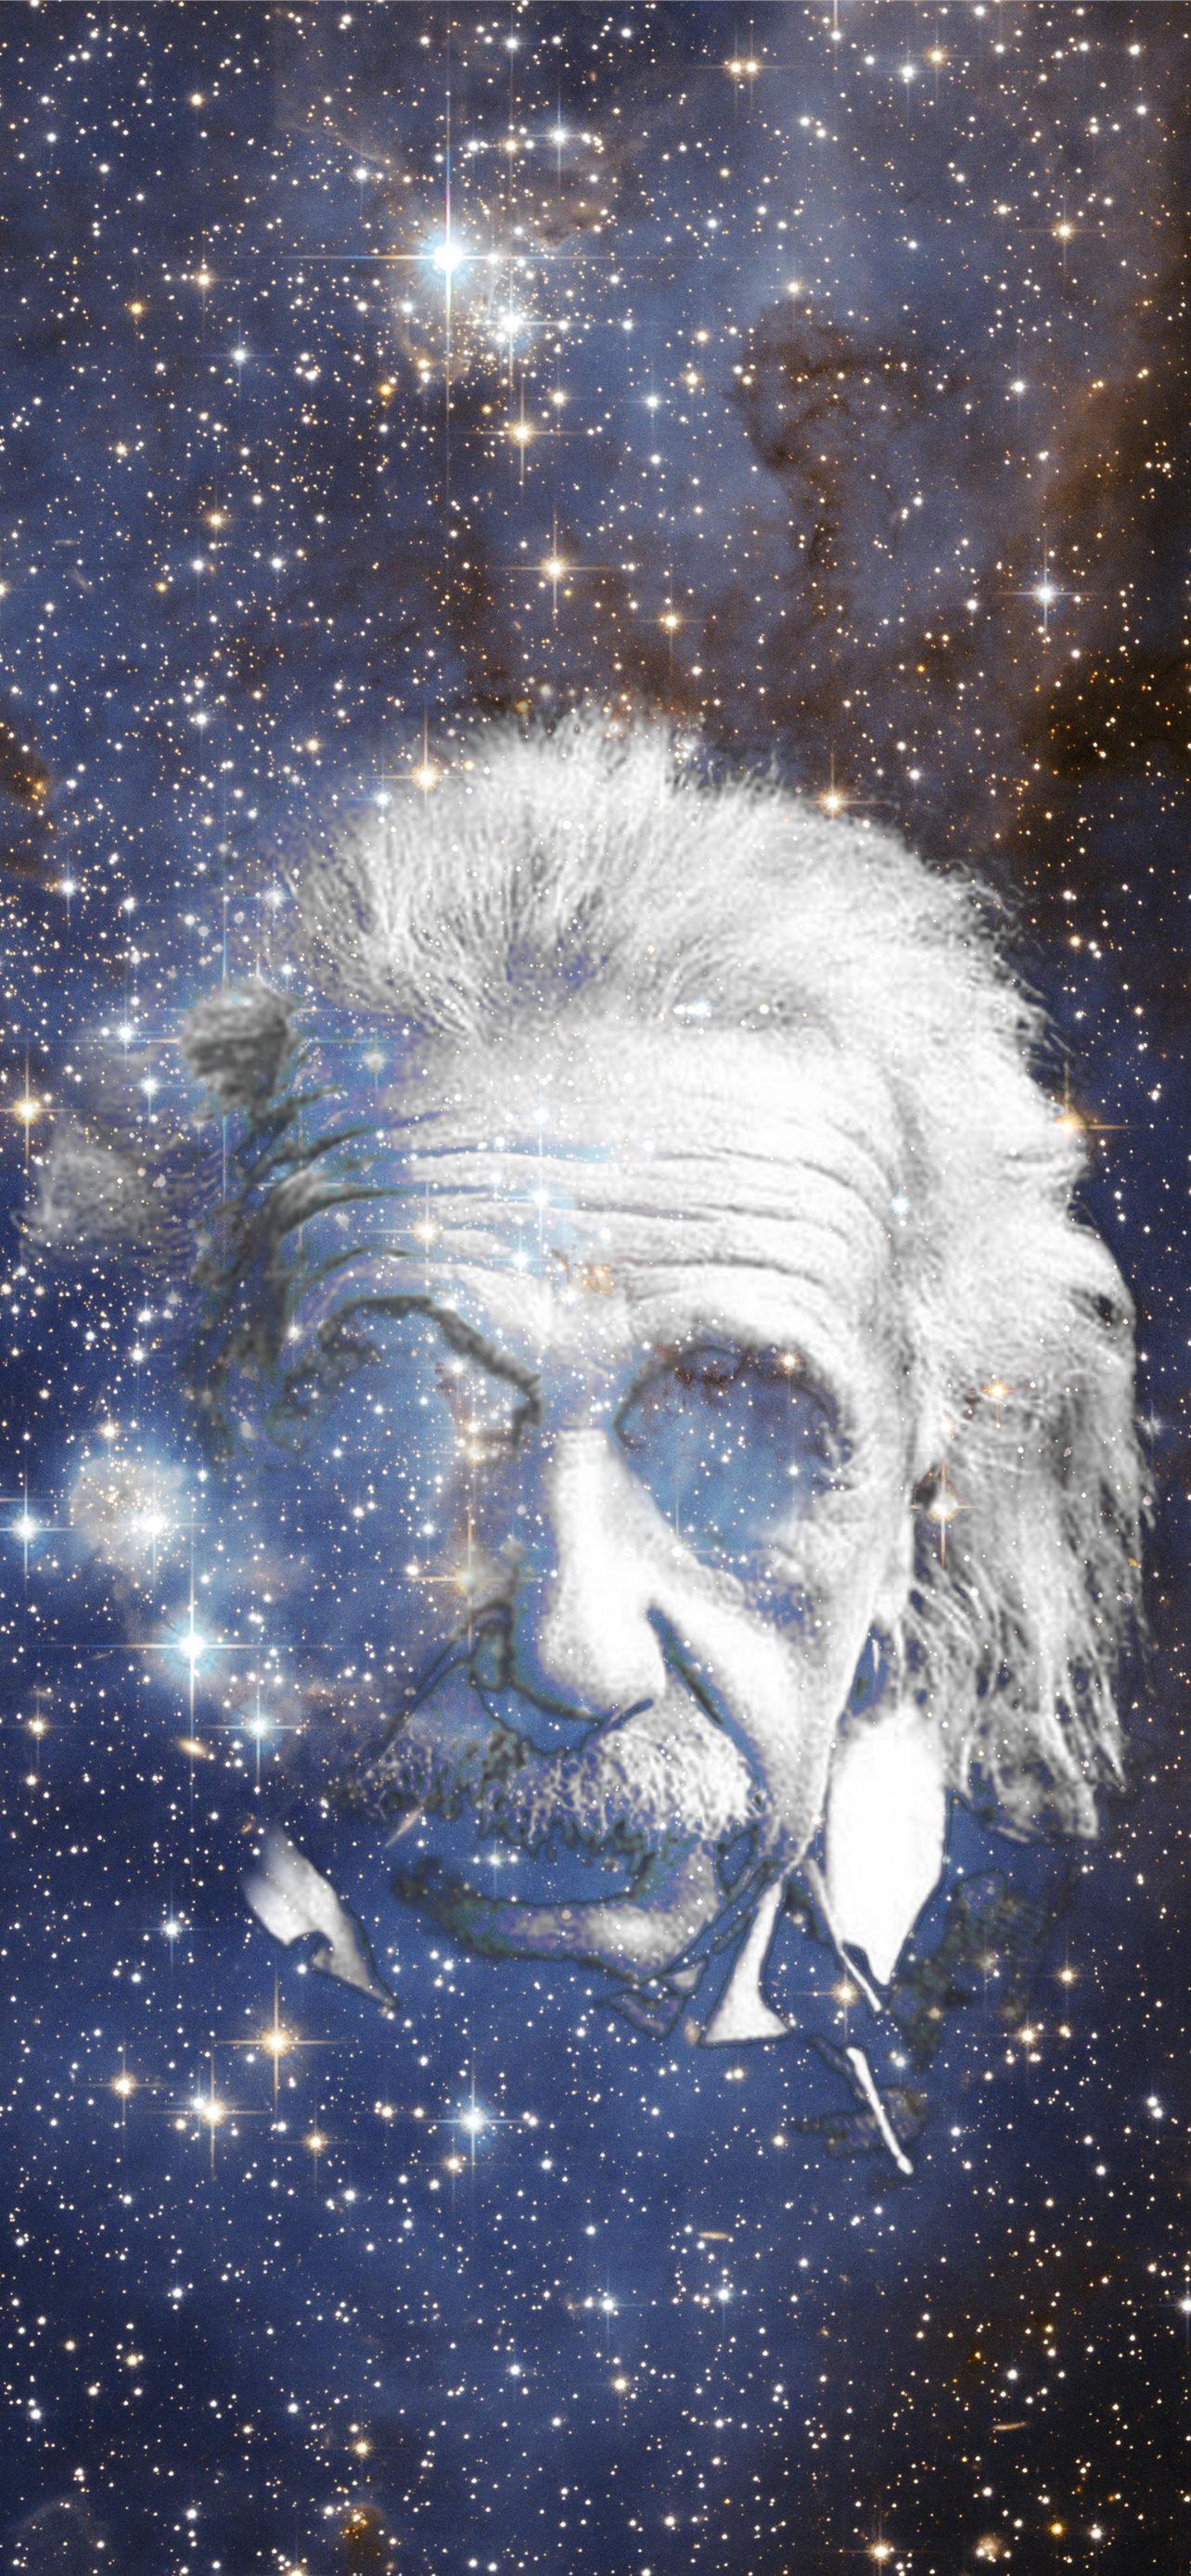 45+] Albert Einstein Wallpapers HD - WallpaperSafari